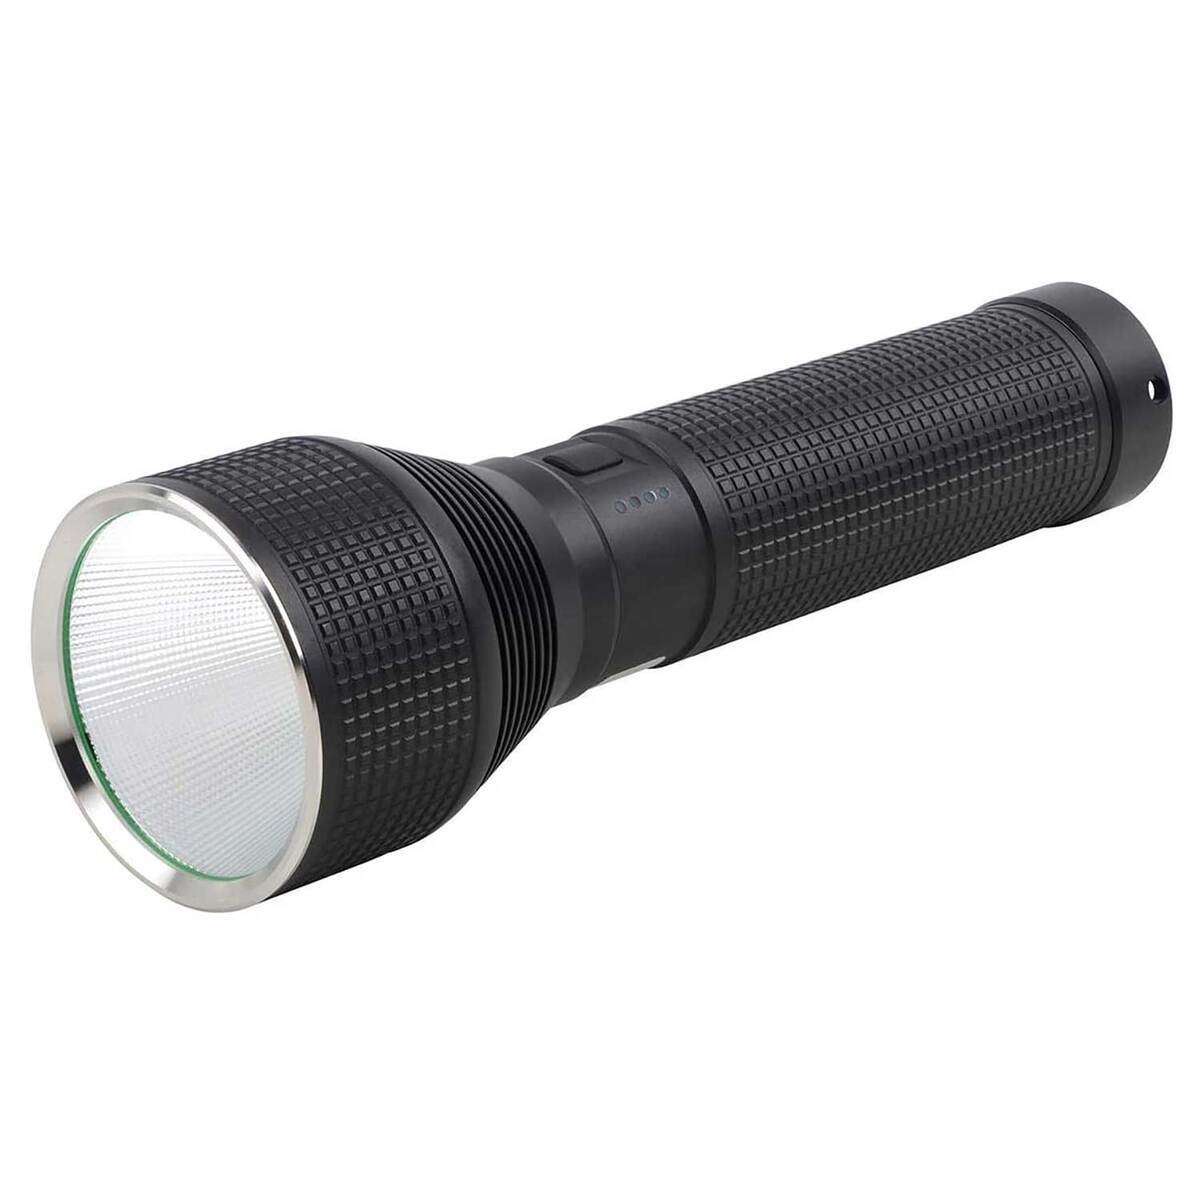 https://www.sportsmans.com/medias/nite-ize-inova-t10r-rechargeable-tactical-led-flashlight-power-bank-1715808-1.jpg?context=bWFzdGVyfGltYWdlc3w2NjIyOHxpbWFnZS9qcGVnfGg2NS9oY2EvMTAxNDU0OTM1ODE4NTQvMTcxNTgwOC0xX2Jhc2UtY29udmVyc2lvbkZvcm1hdF8xMjAwLWNvbnZlcnNpb25Gb3JtYXR8MTE1YTdhN2JiZGNjMWVhMWNhZTdkMWI5ZjdkNTQ1NDgwNGNmNWU5NGVkZjY4OTcwMzMwY2QwNDE4N2MxYTcyMA